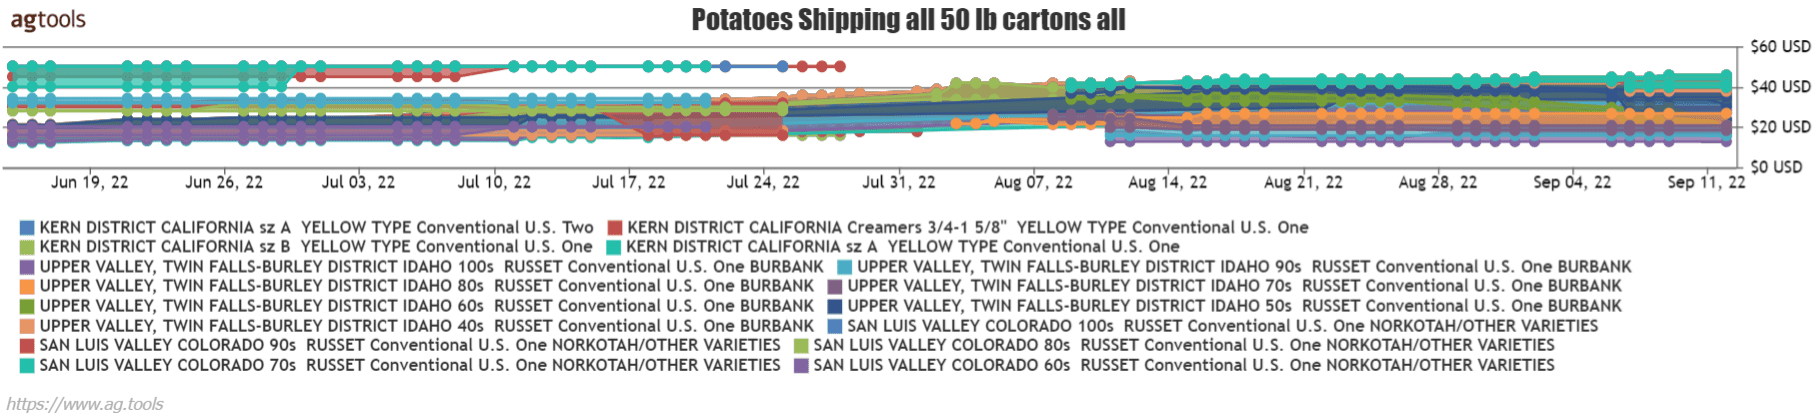 potato cartons 9-13-22